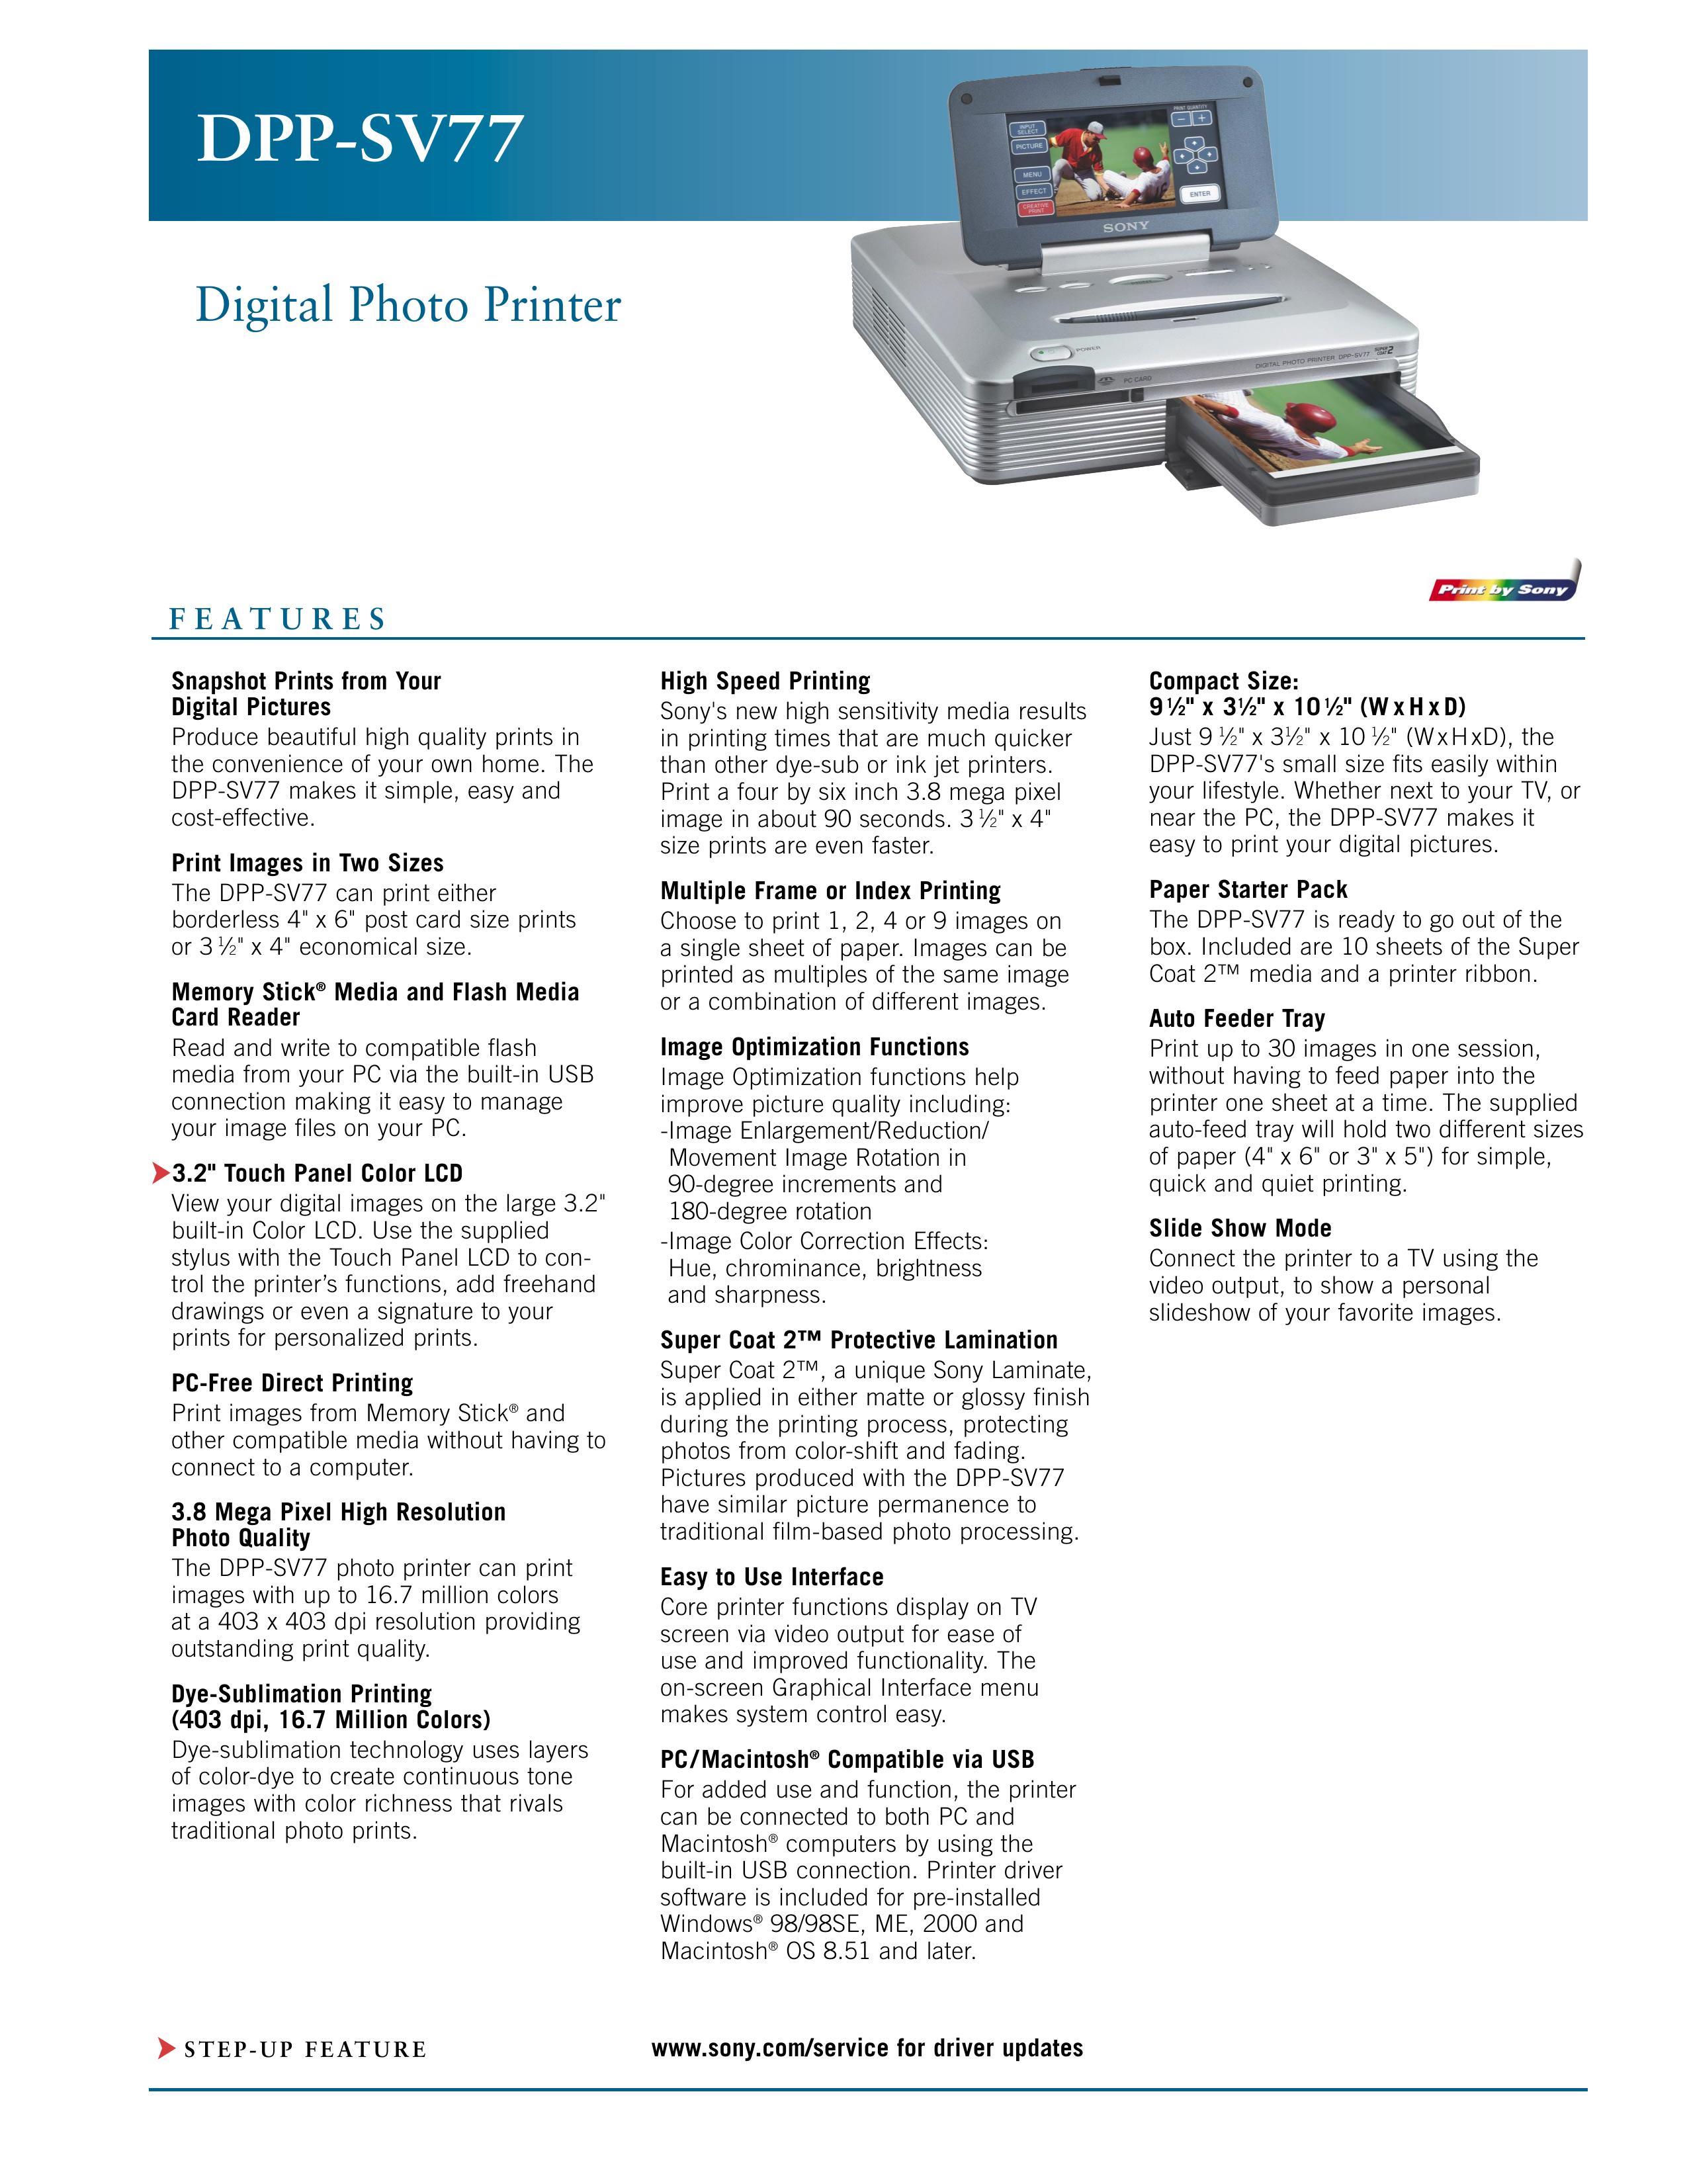 Sony DPP-SV77 Photo Printer User Manual